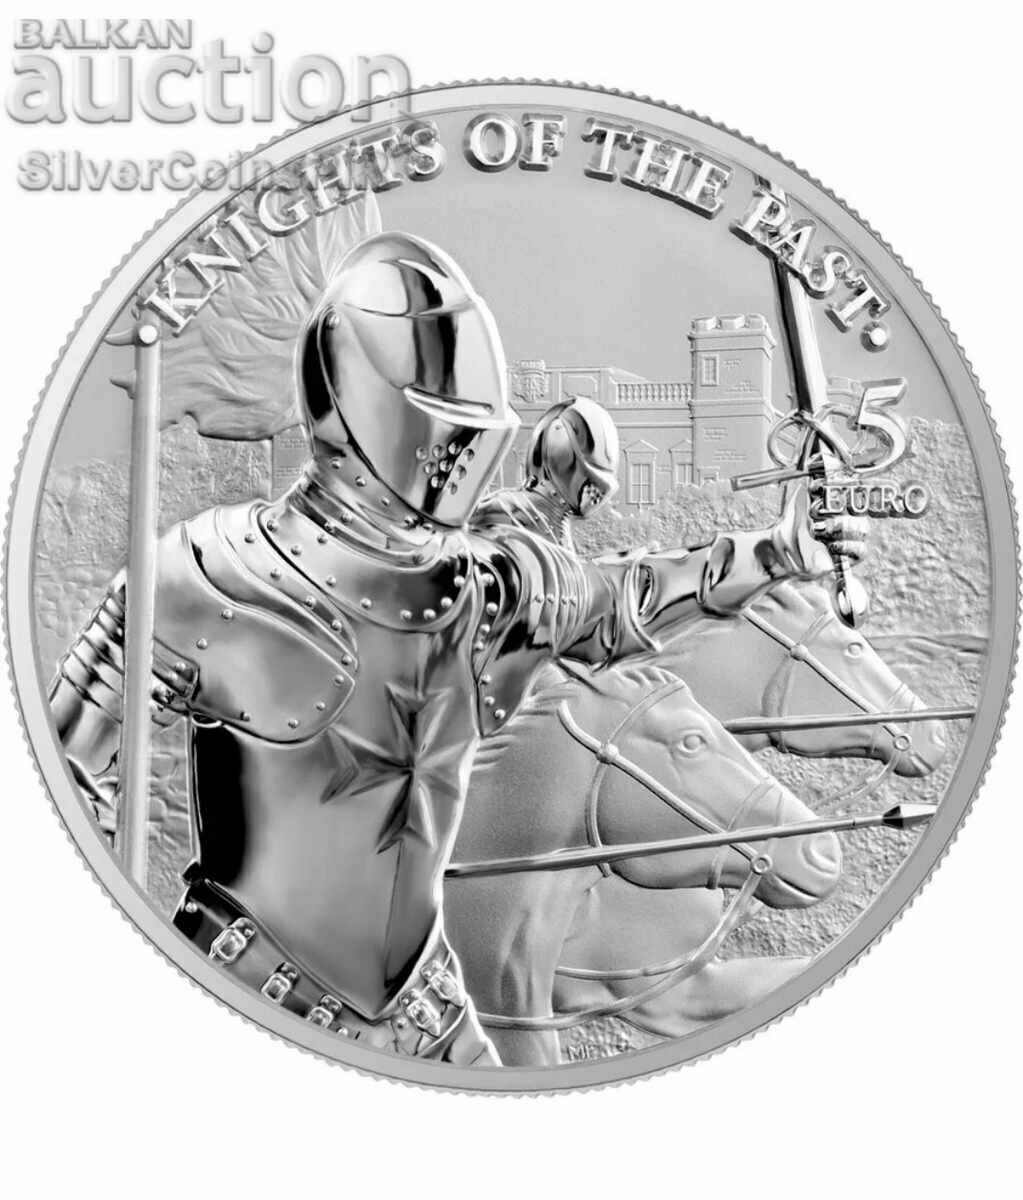 Silver 1 oz Knights of the Past 2021 Malta Germania mint